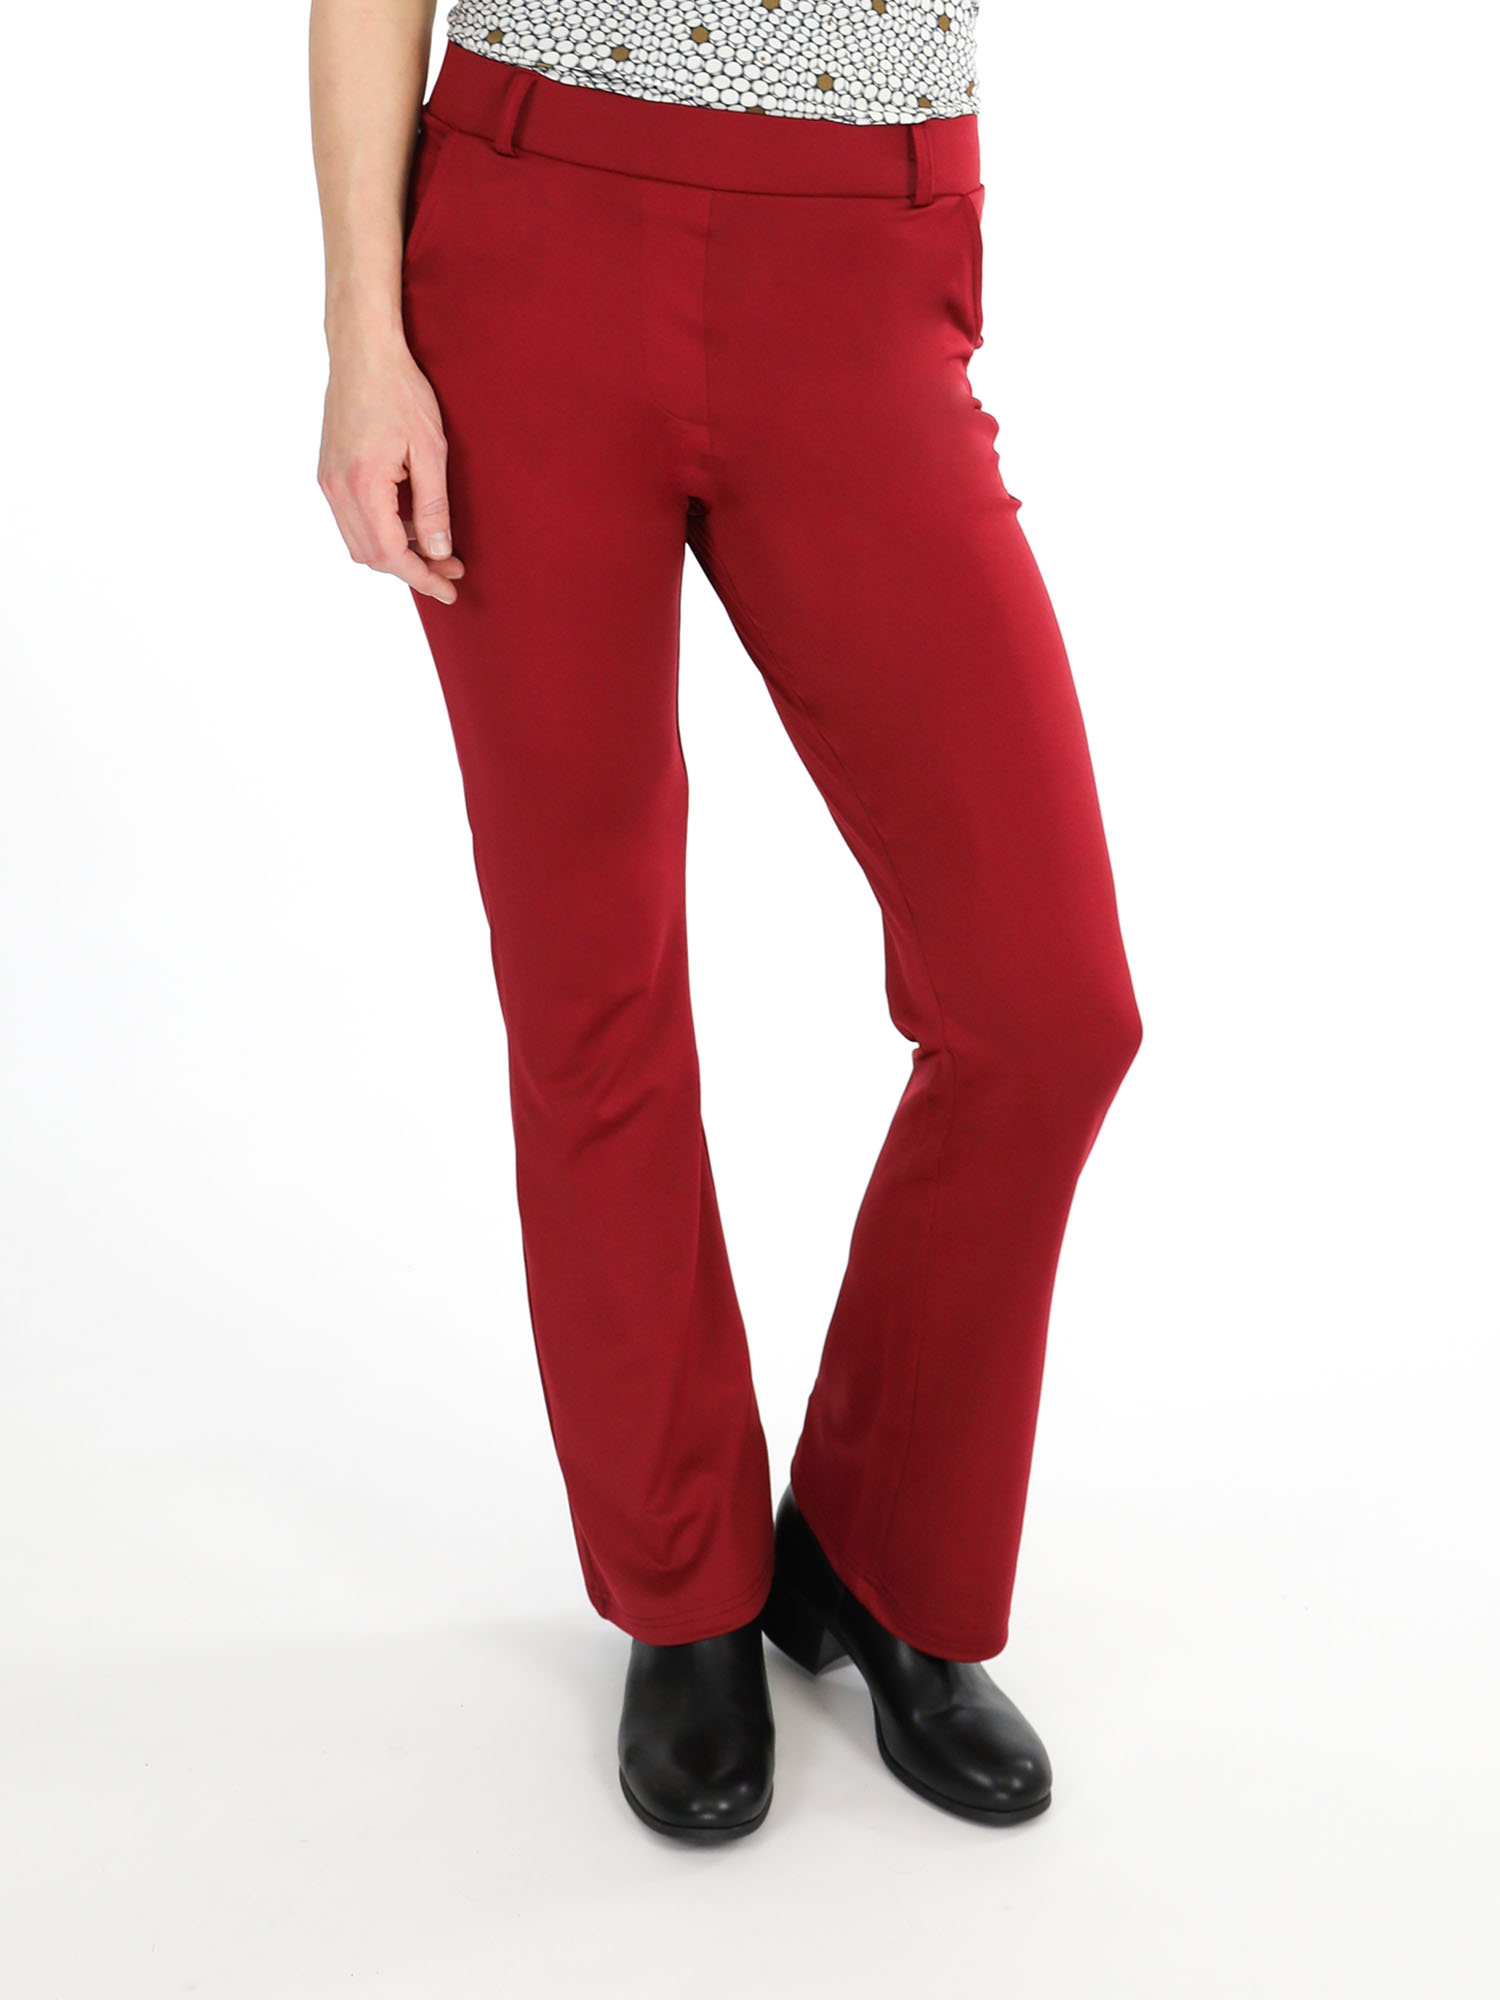 pakket geloof handel Bordeaux rode flared travelstof broek van Thombiq - Fashion to Fashion